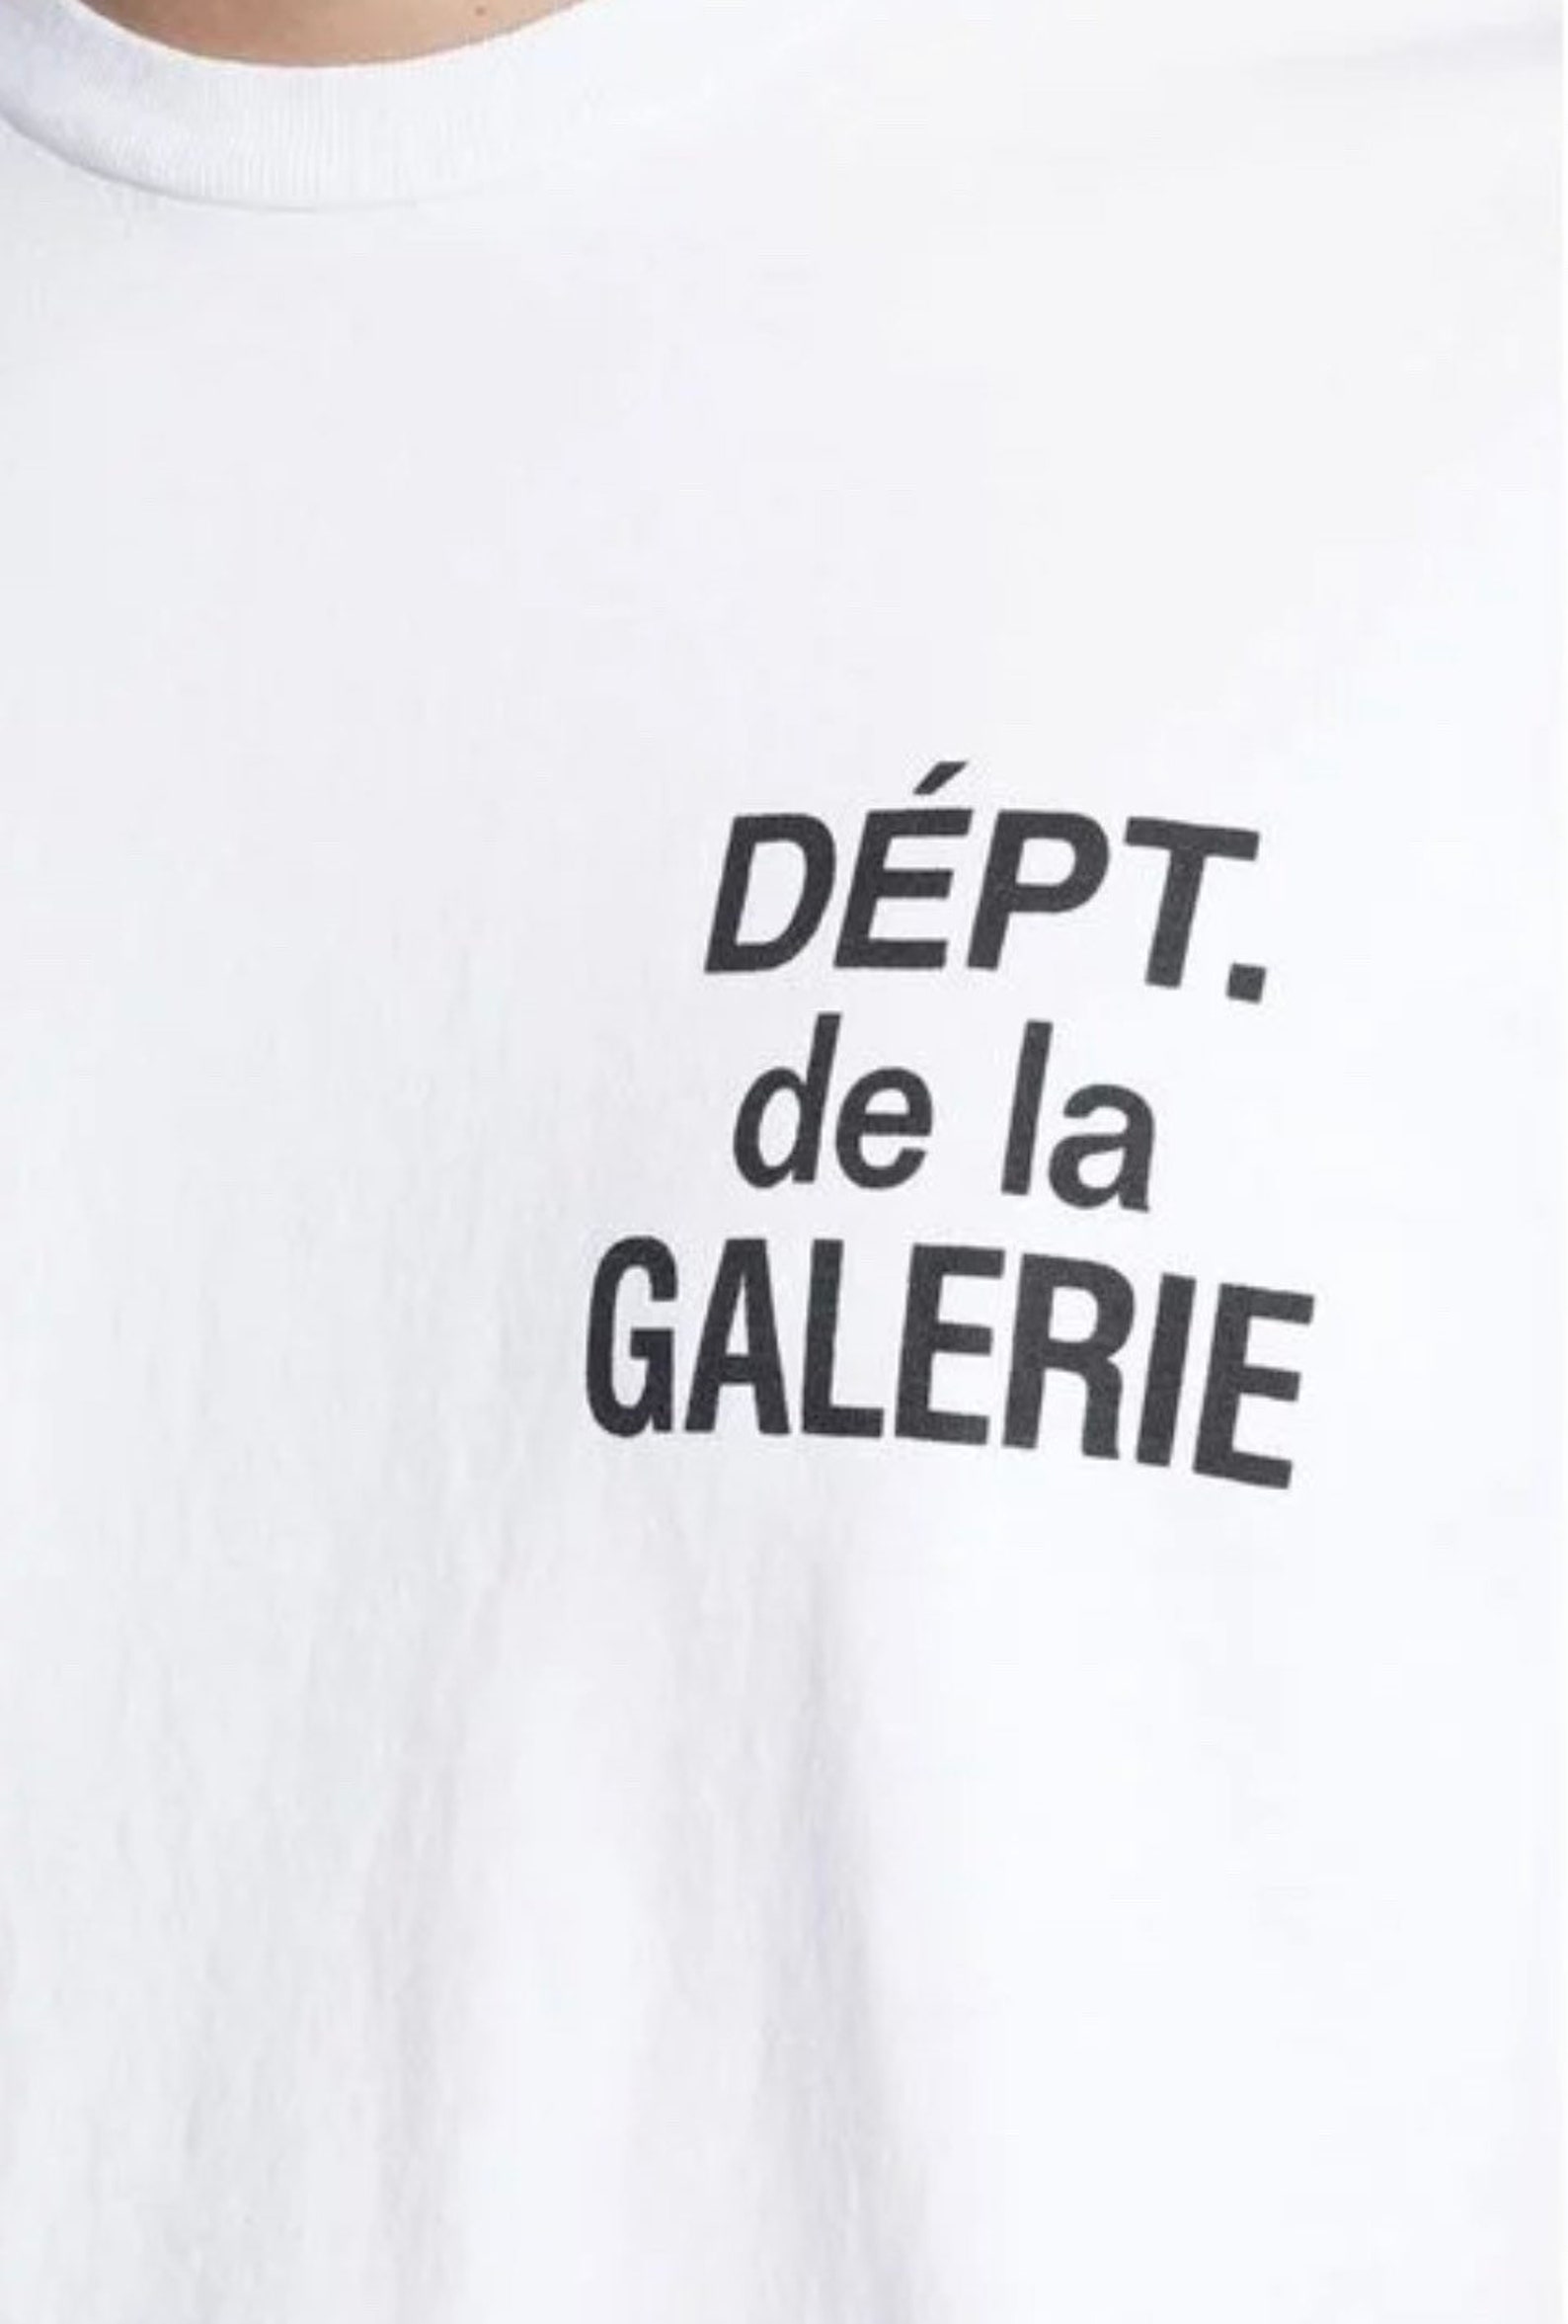 Dept De La Galerie Shirts Available Now custom Made - Etsy